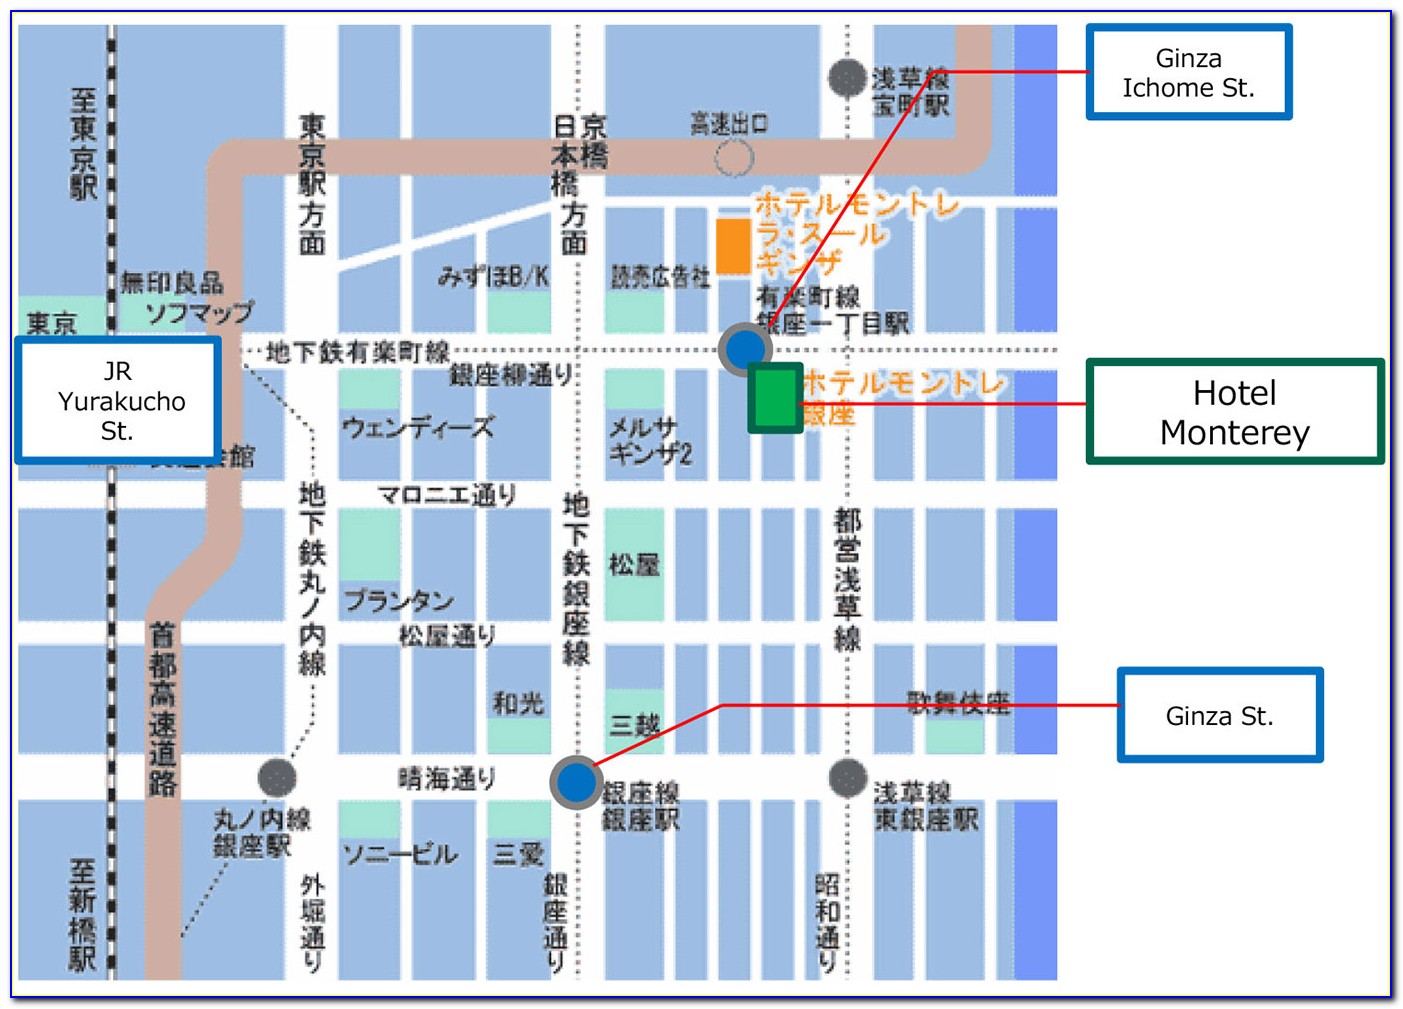 Daiwa Roynet Hotel Ginza Map